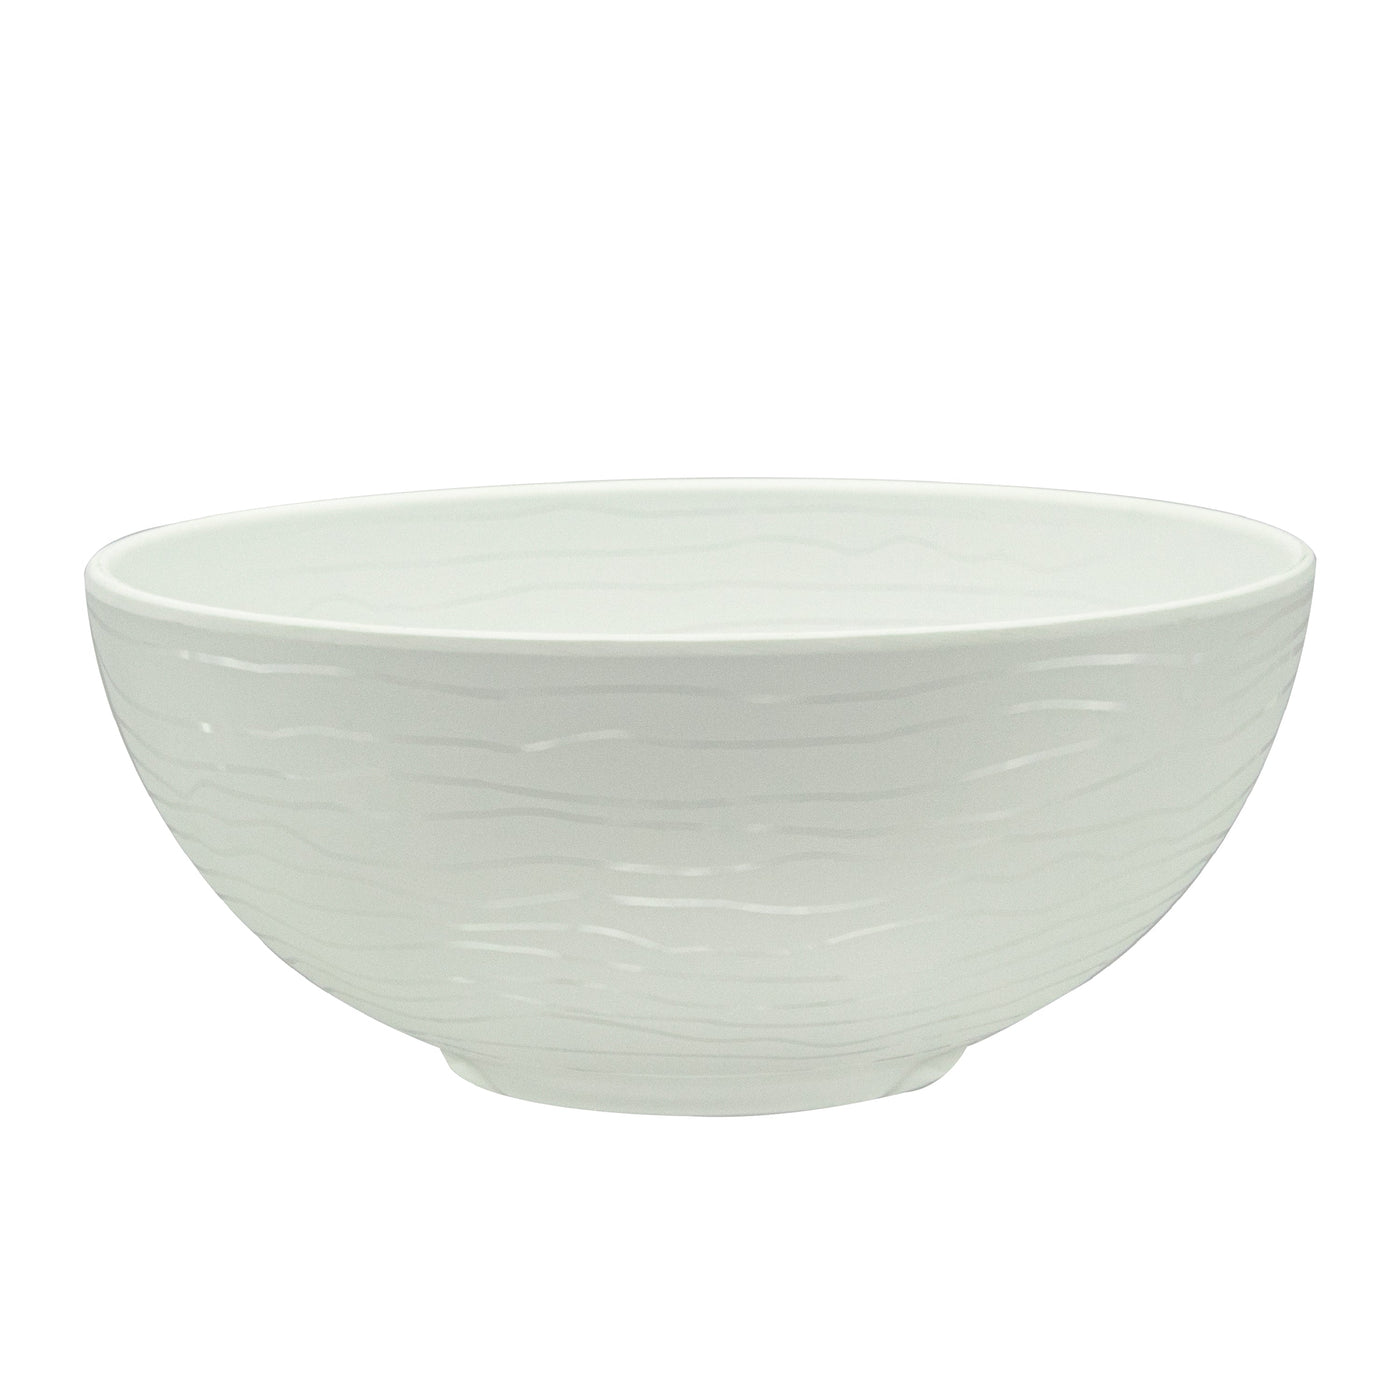 4pc Organica Melamine Bowl Set - White